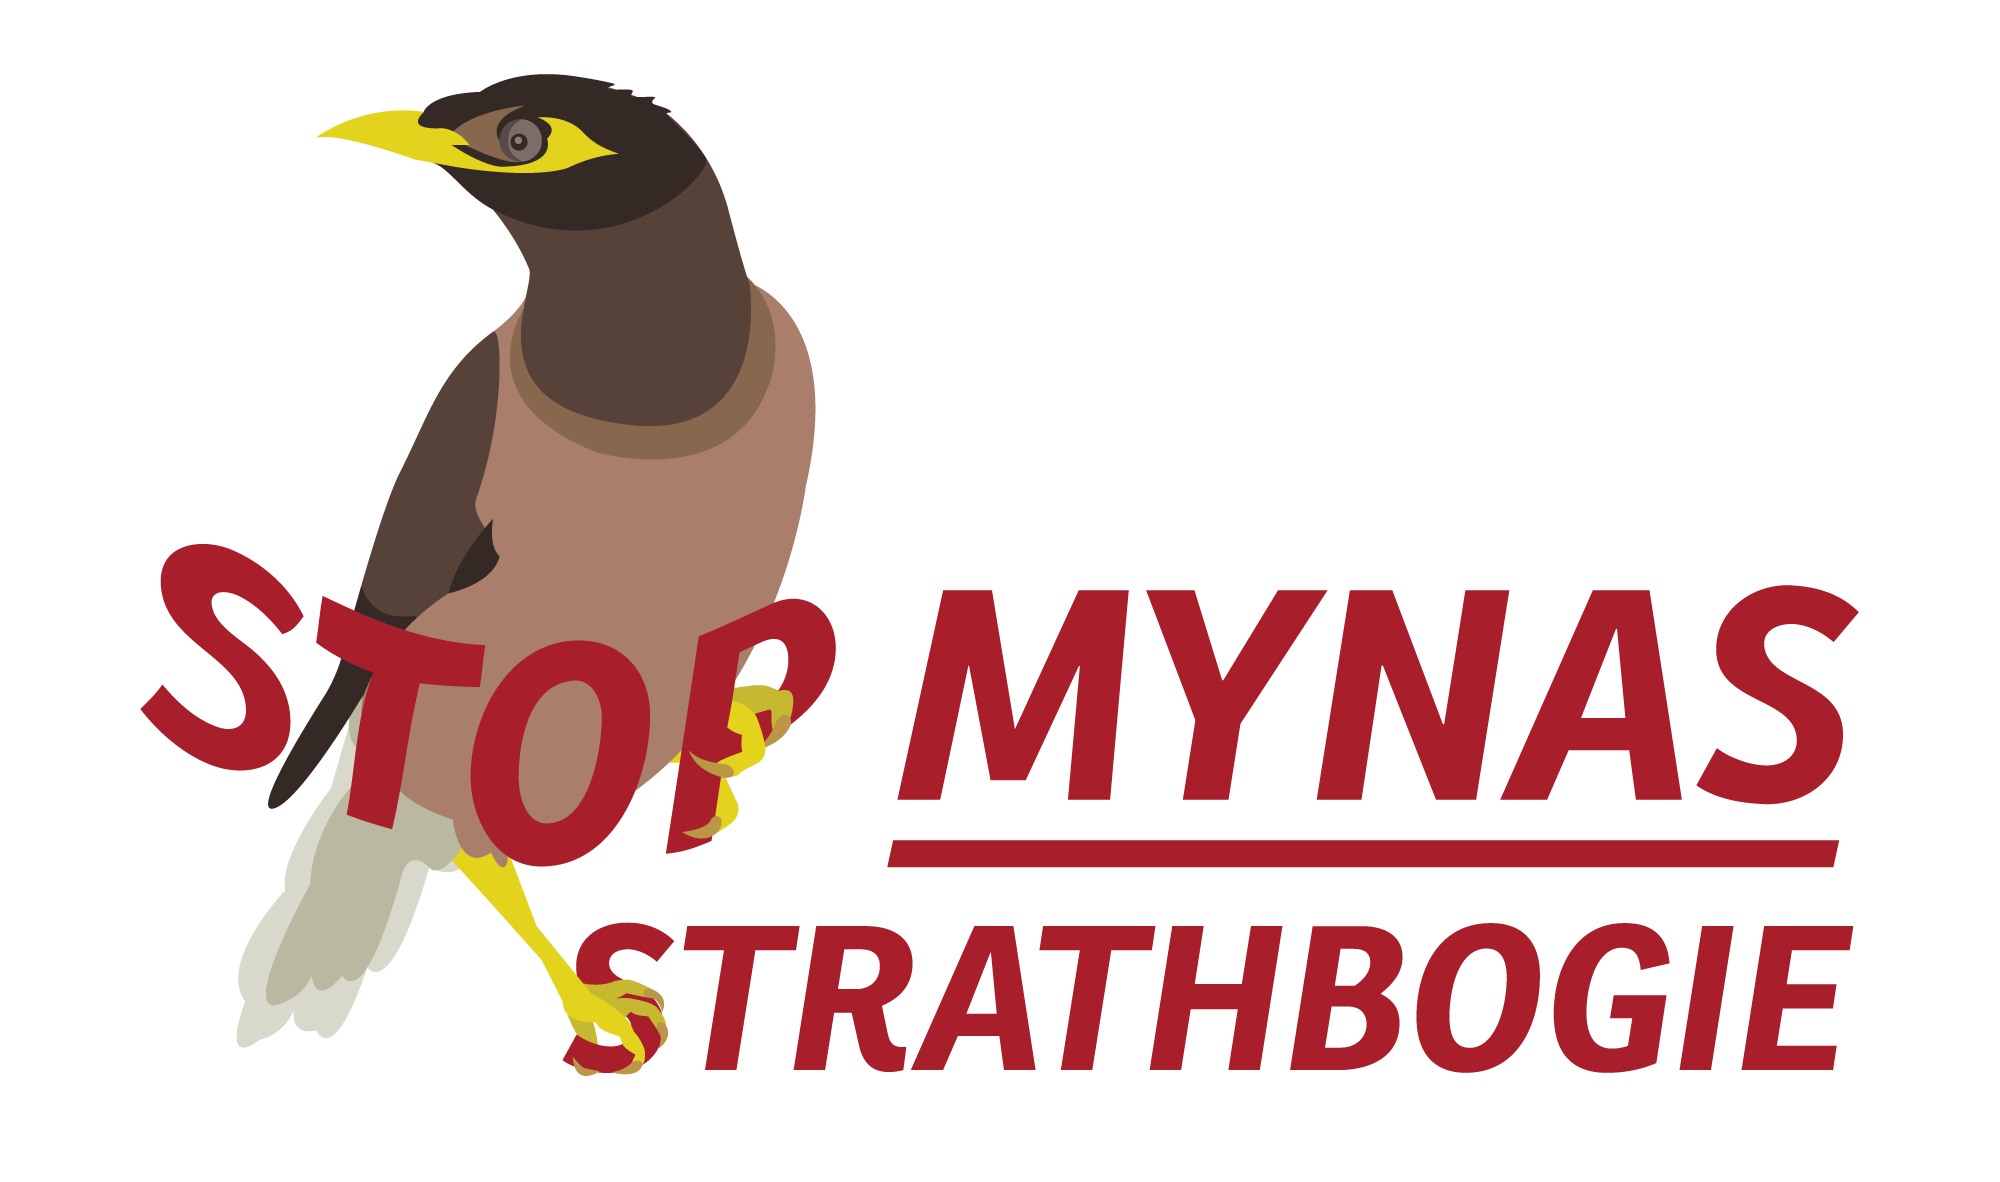 Stop Mynas Strathbogie – Workshop #1